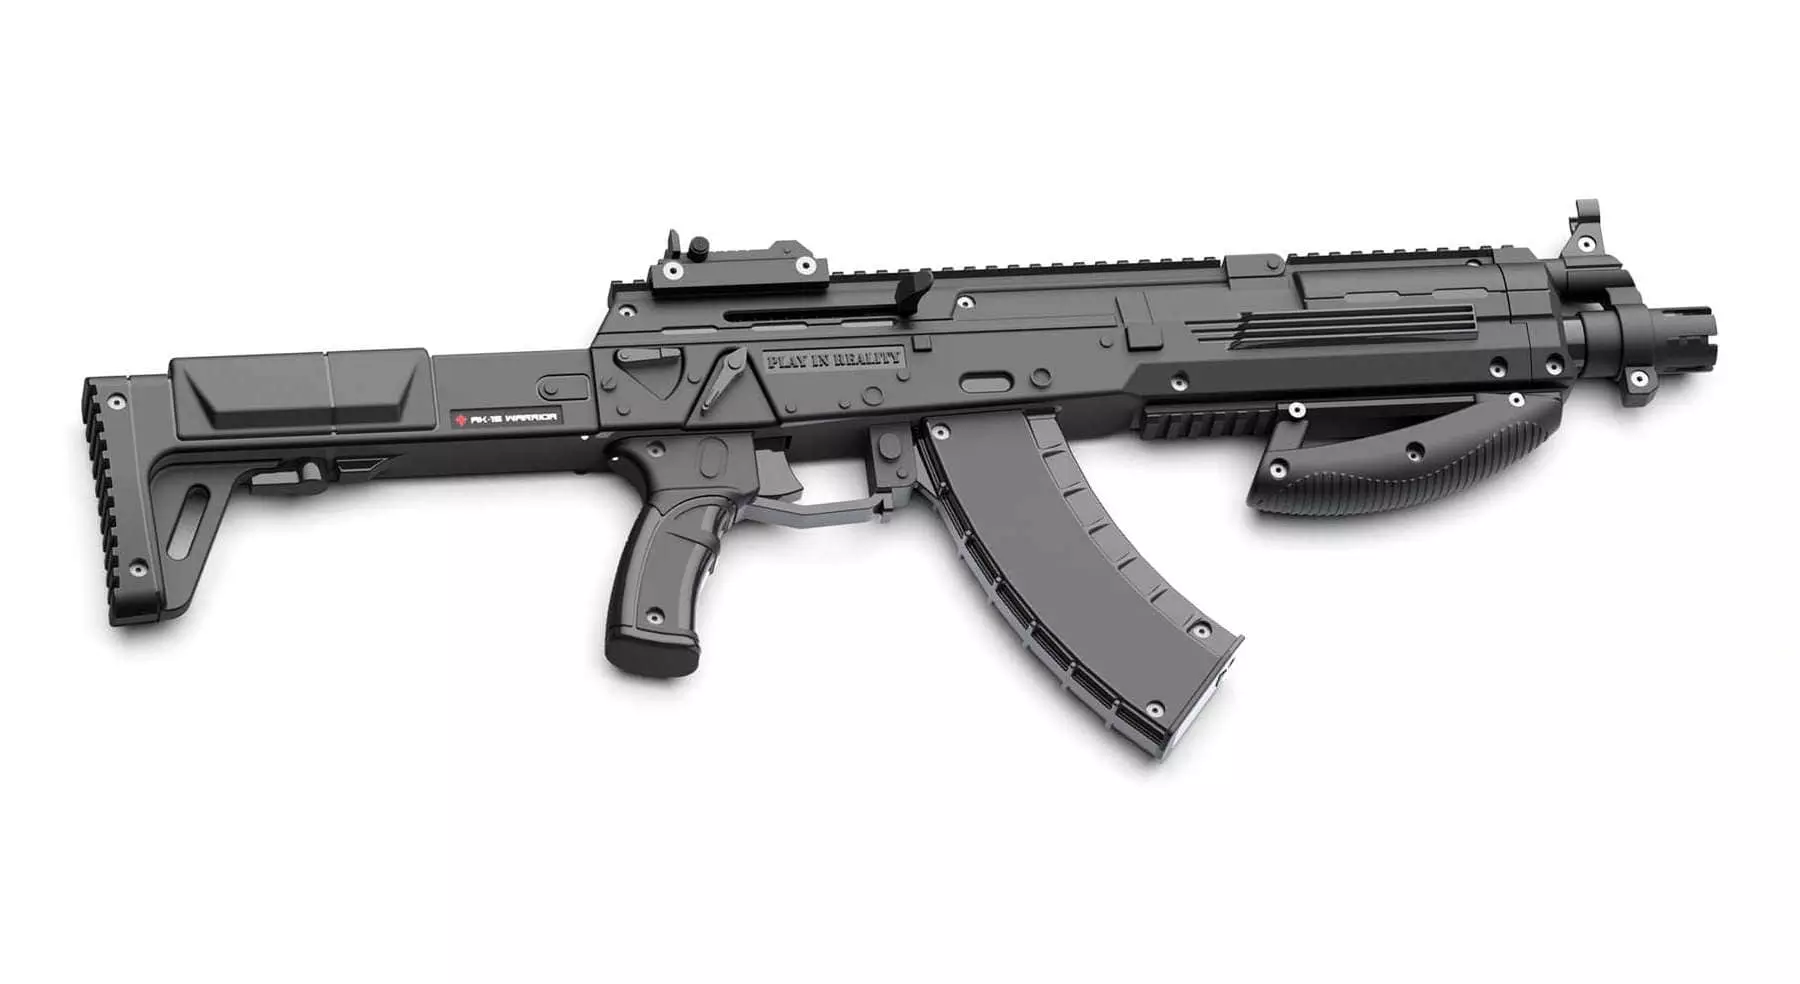 AK15 Warrior laser tag gun for laser tag business